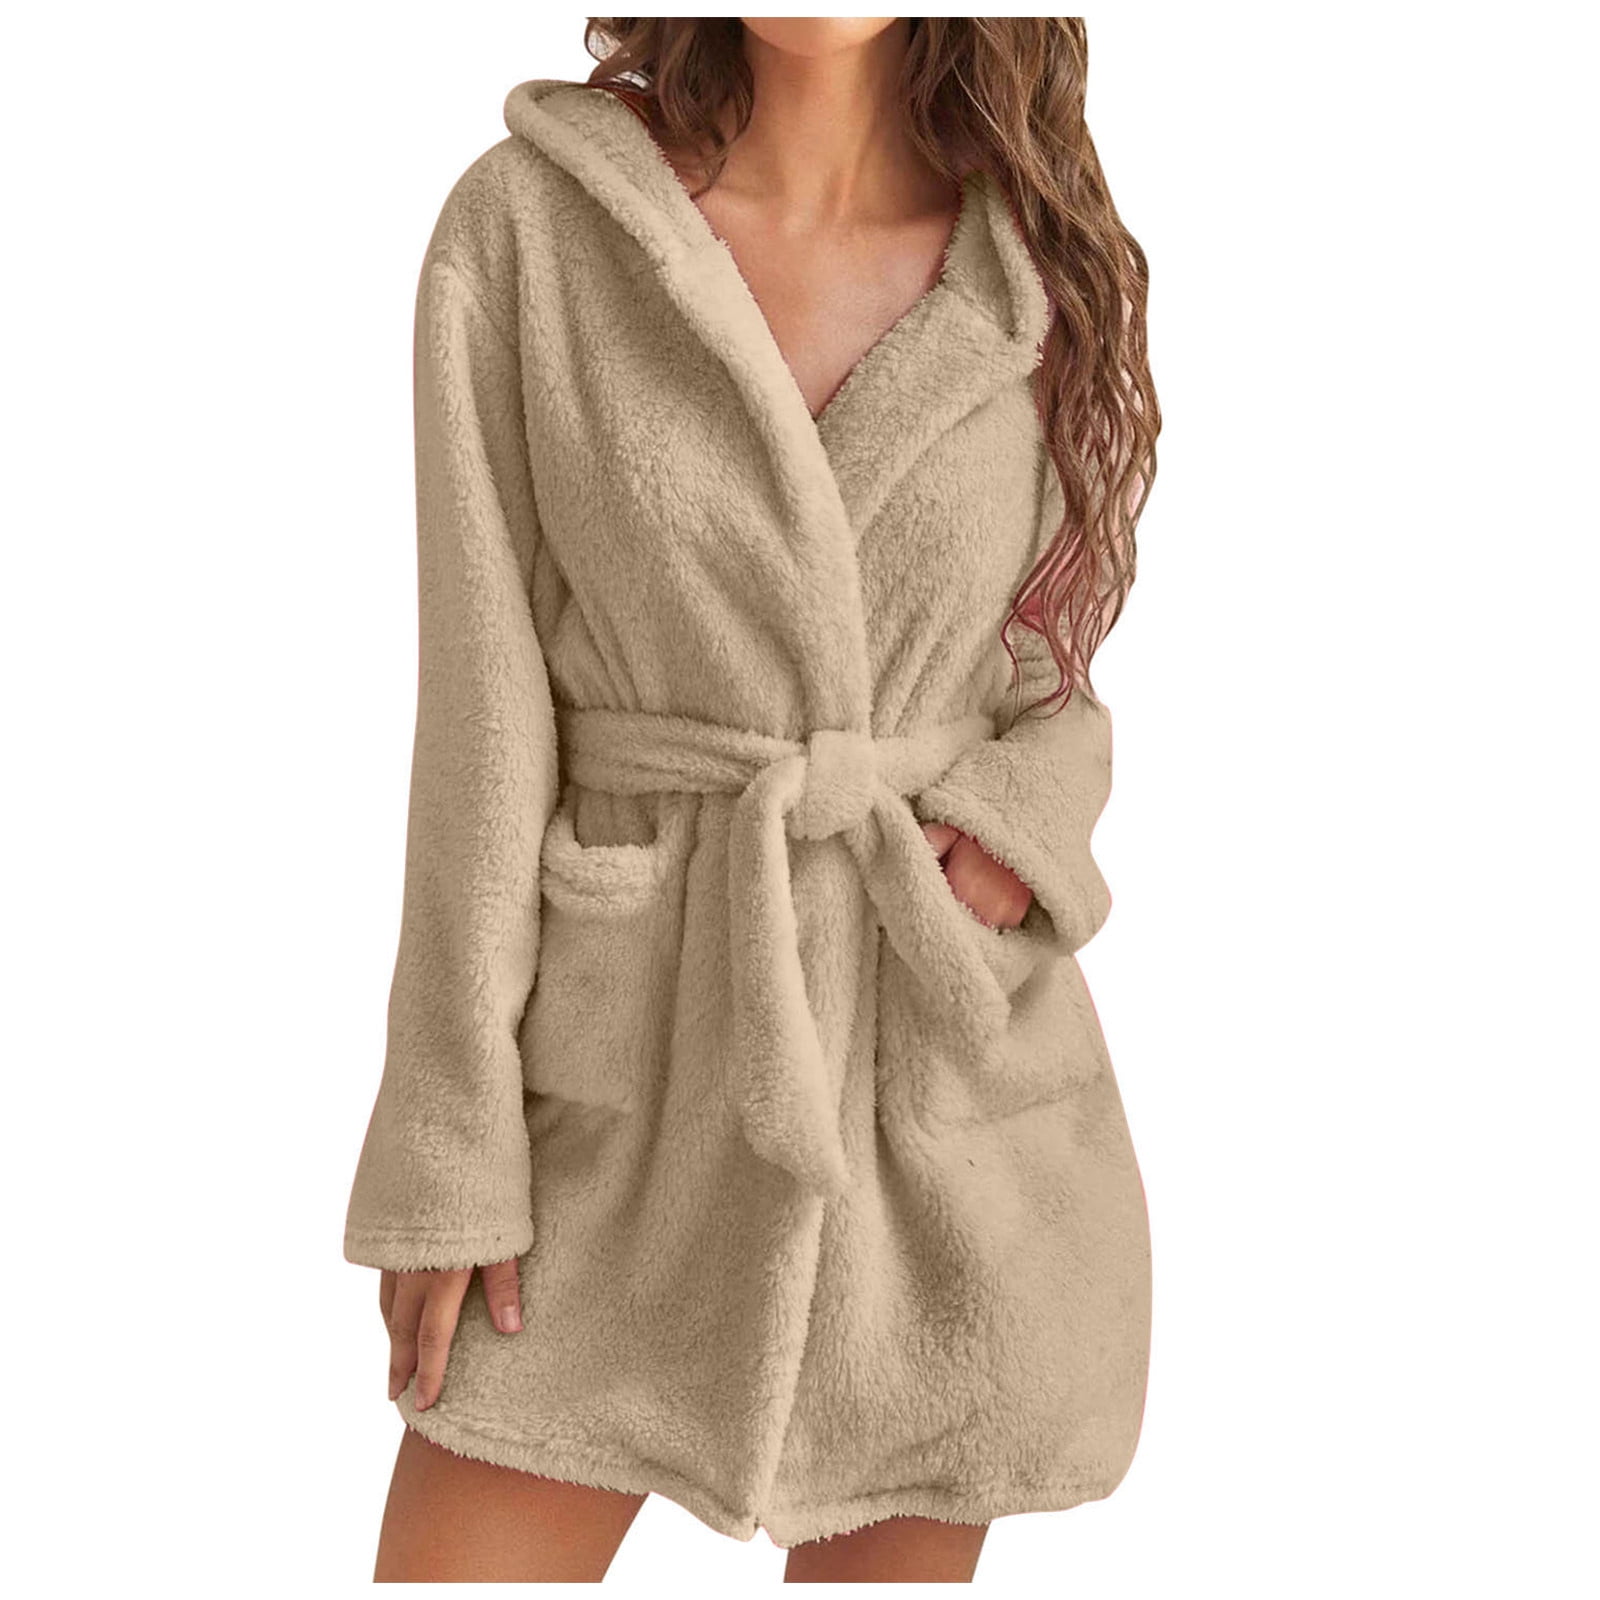 YanHoo Robes for Women, Bath Robe Women's Hooded Fleece Bathrobes Soft Plush  Sleepwear Fluffy Warm Sherpa Shaggy Bathrobe 